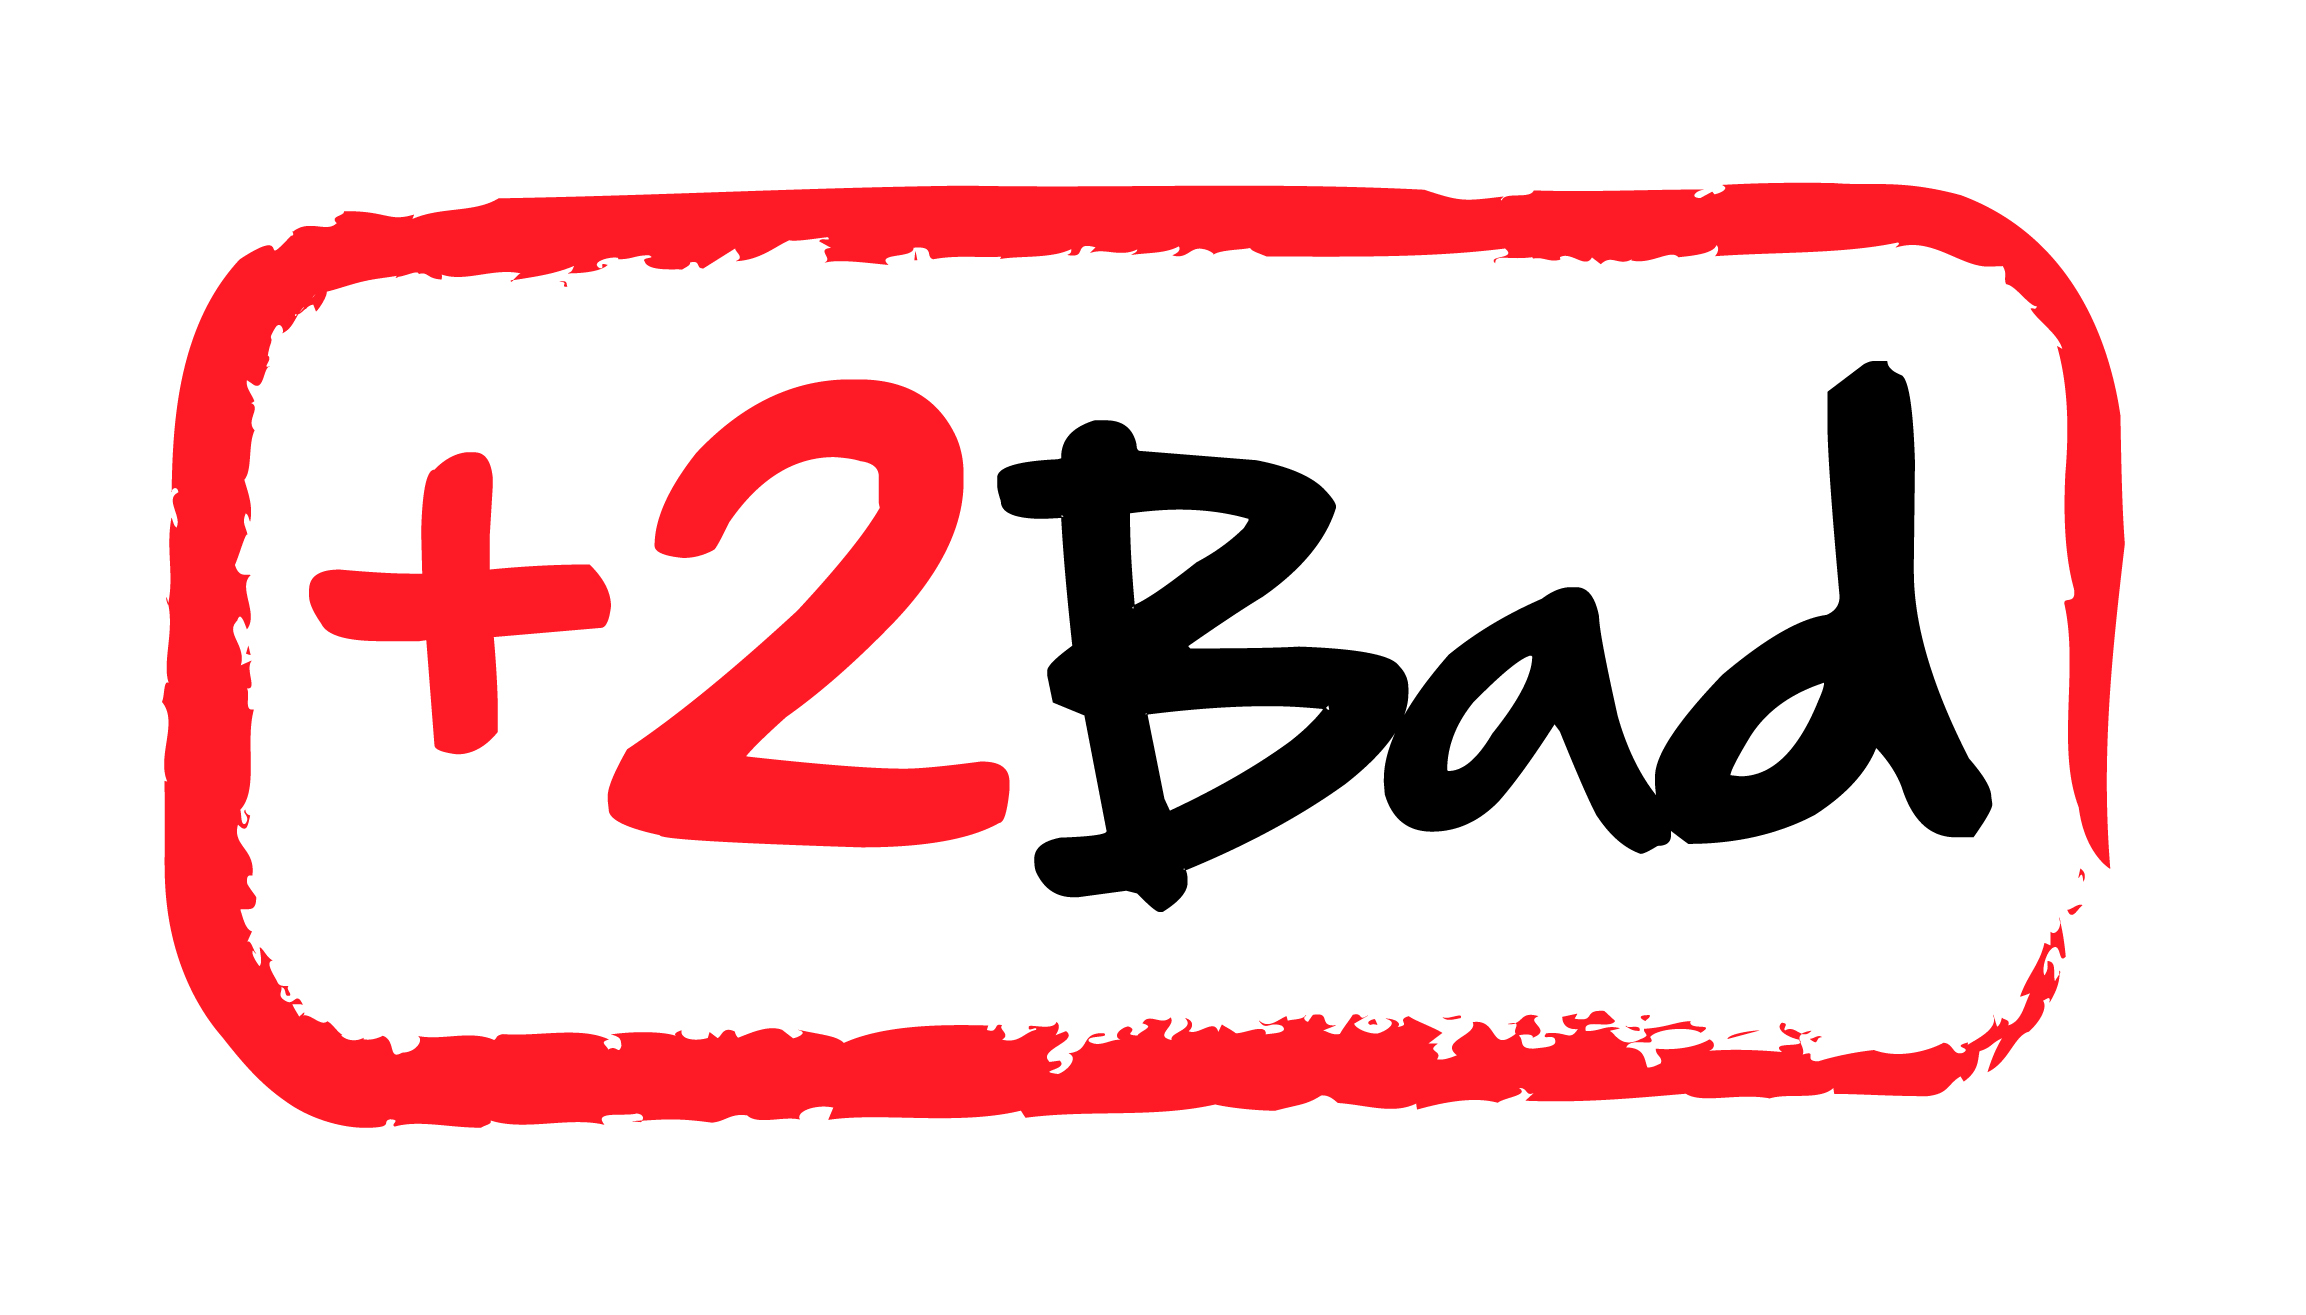 logo 2bad